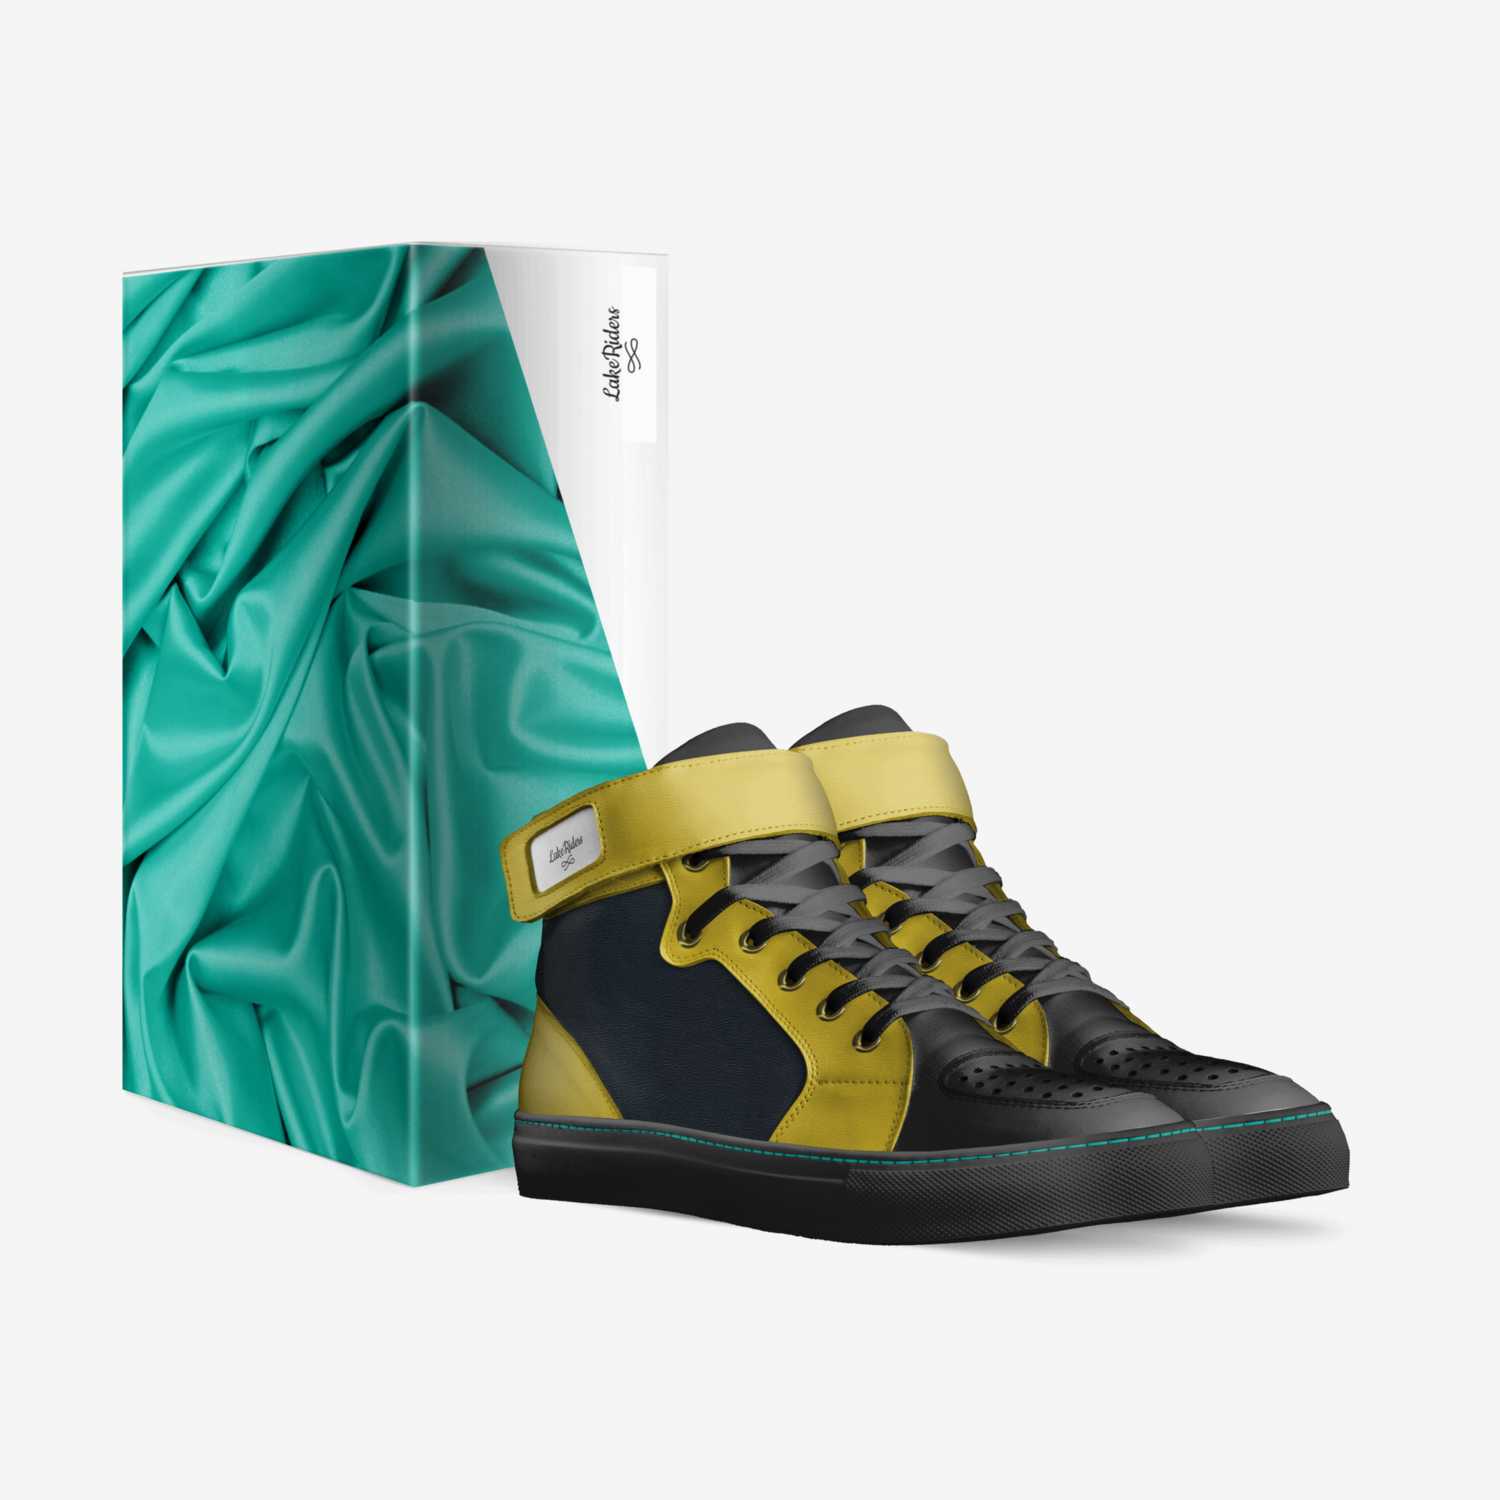 LakeRiders custom made in Italy shoes by Layken Elizabeth Meaders | Box view